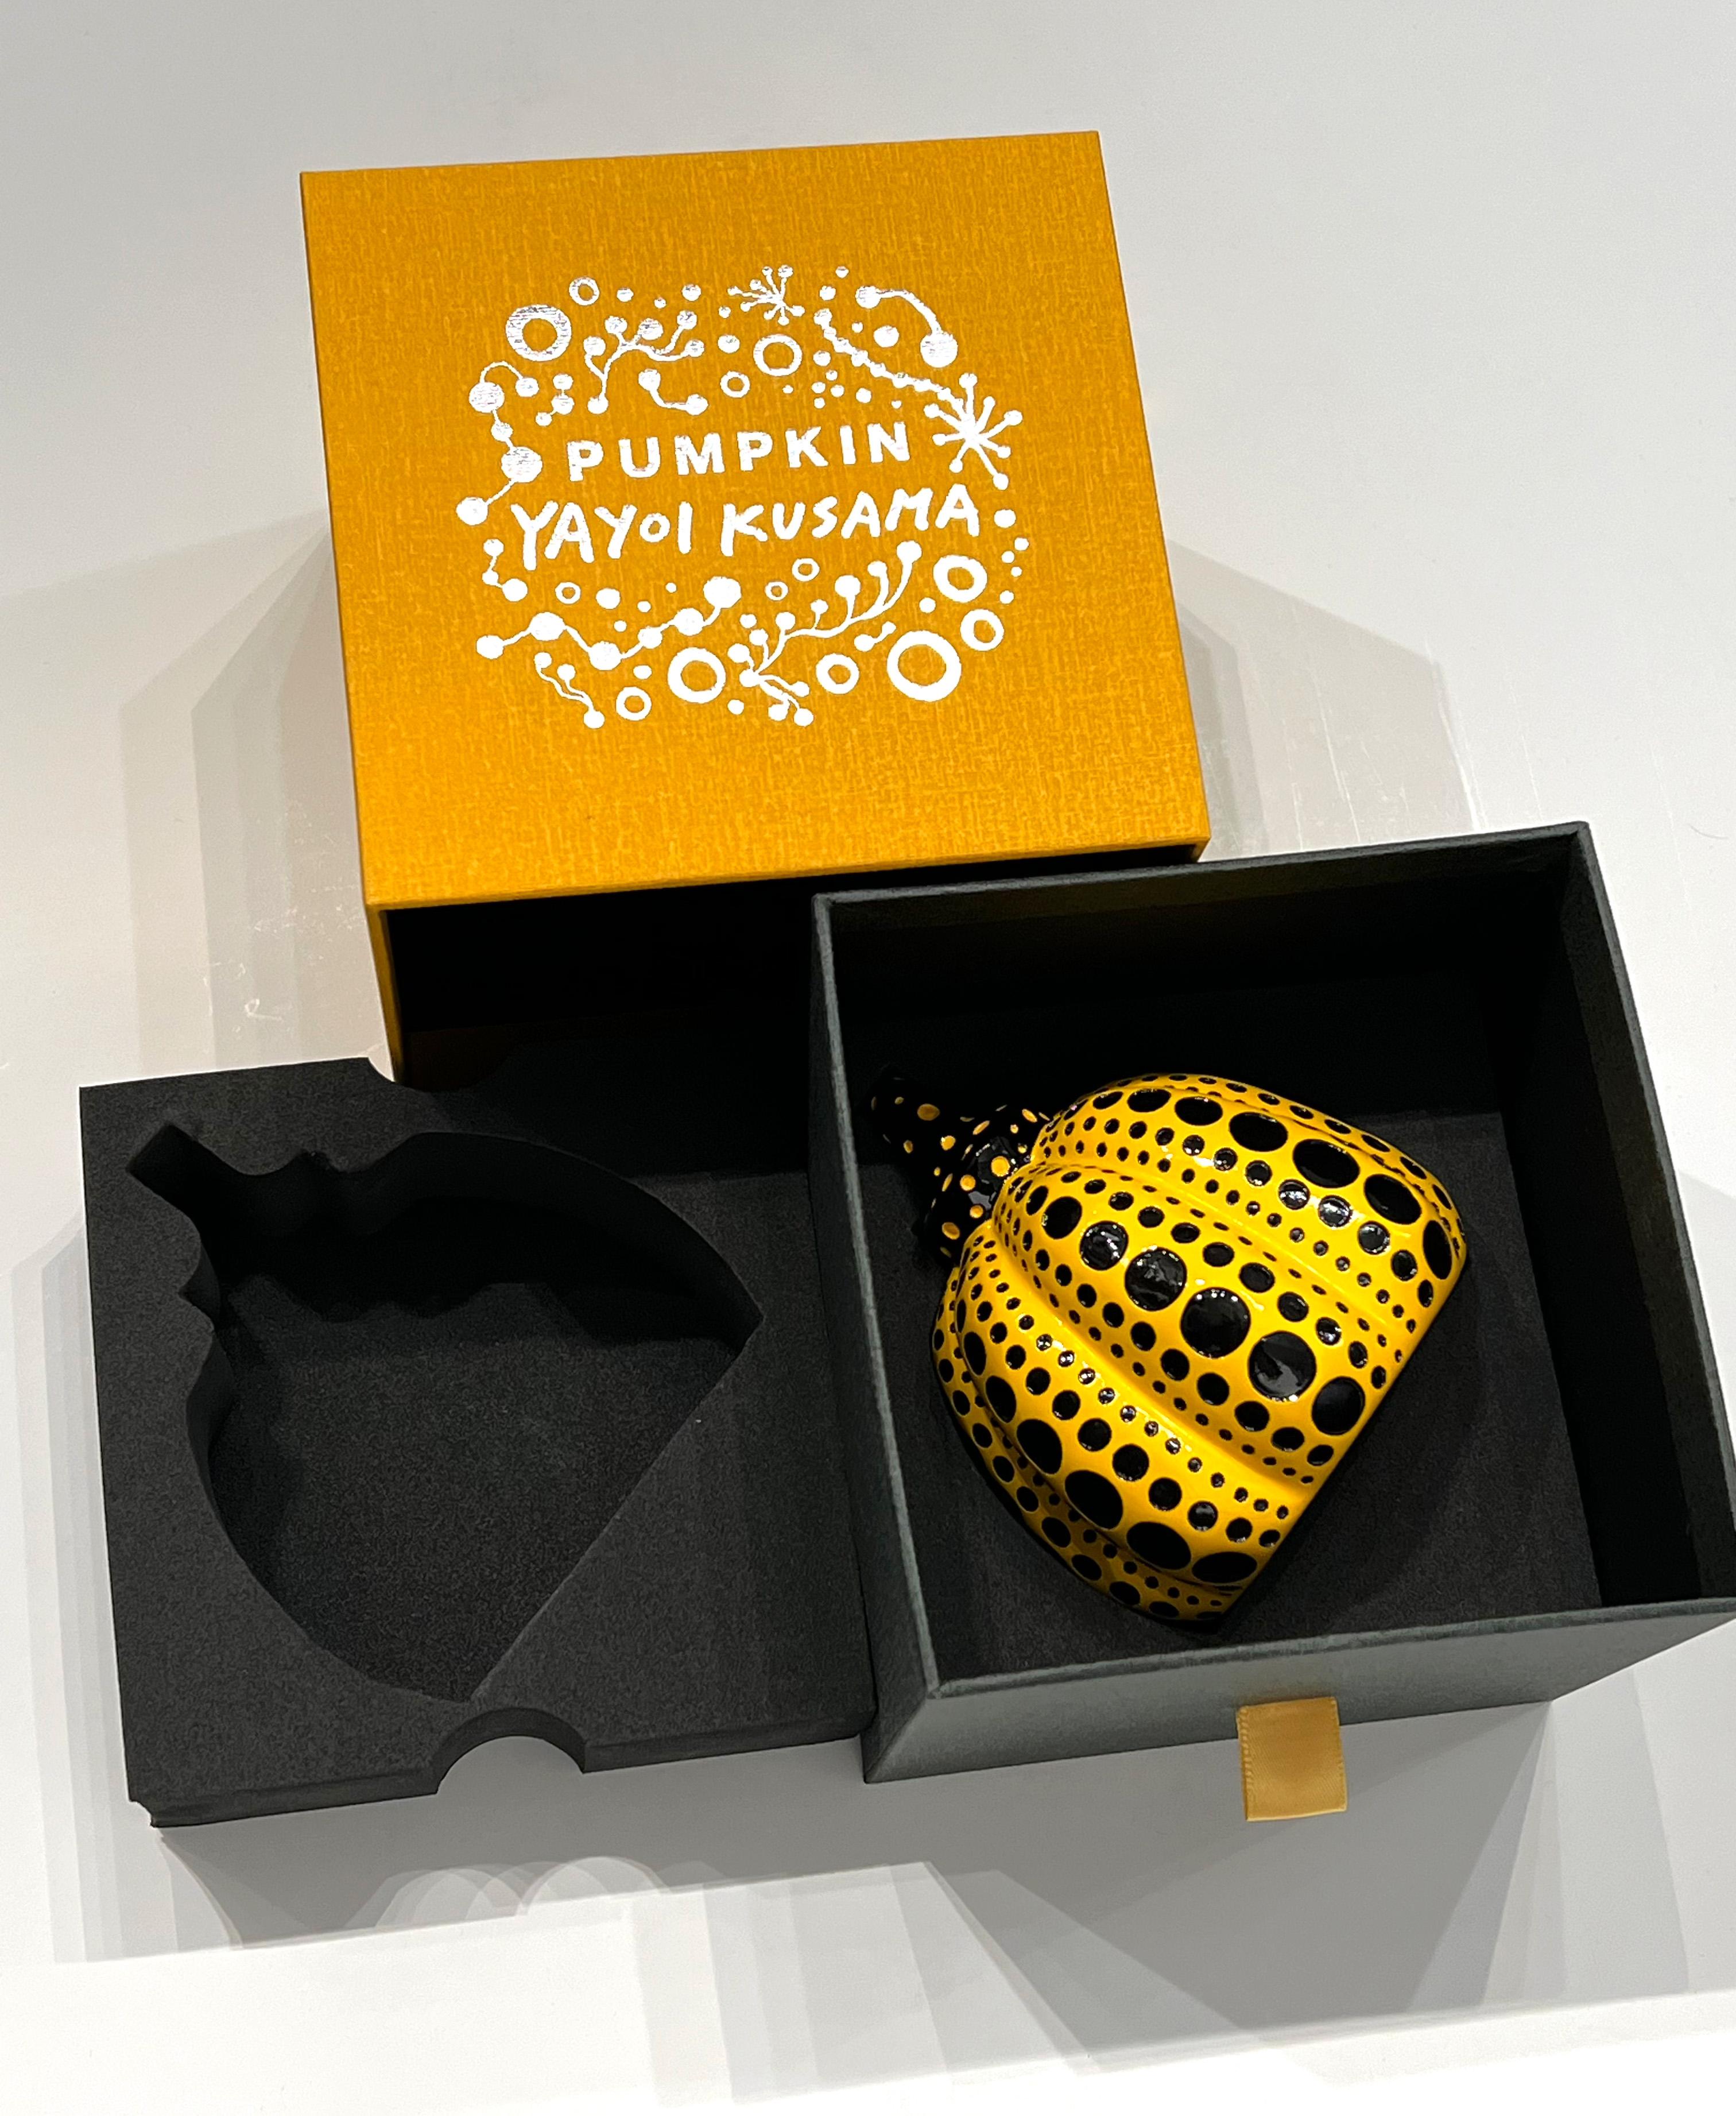 Yayoi Kusama 'Pumpkin' Yellow/Black Pumpkin Pop Art Resin Sculpture, 2016 For Sale 3